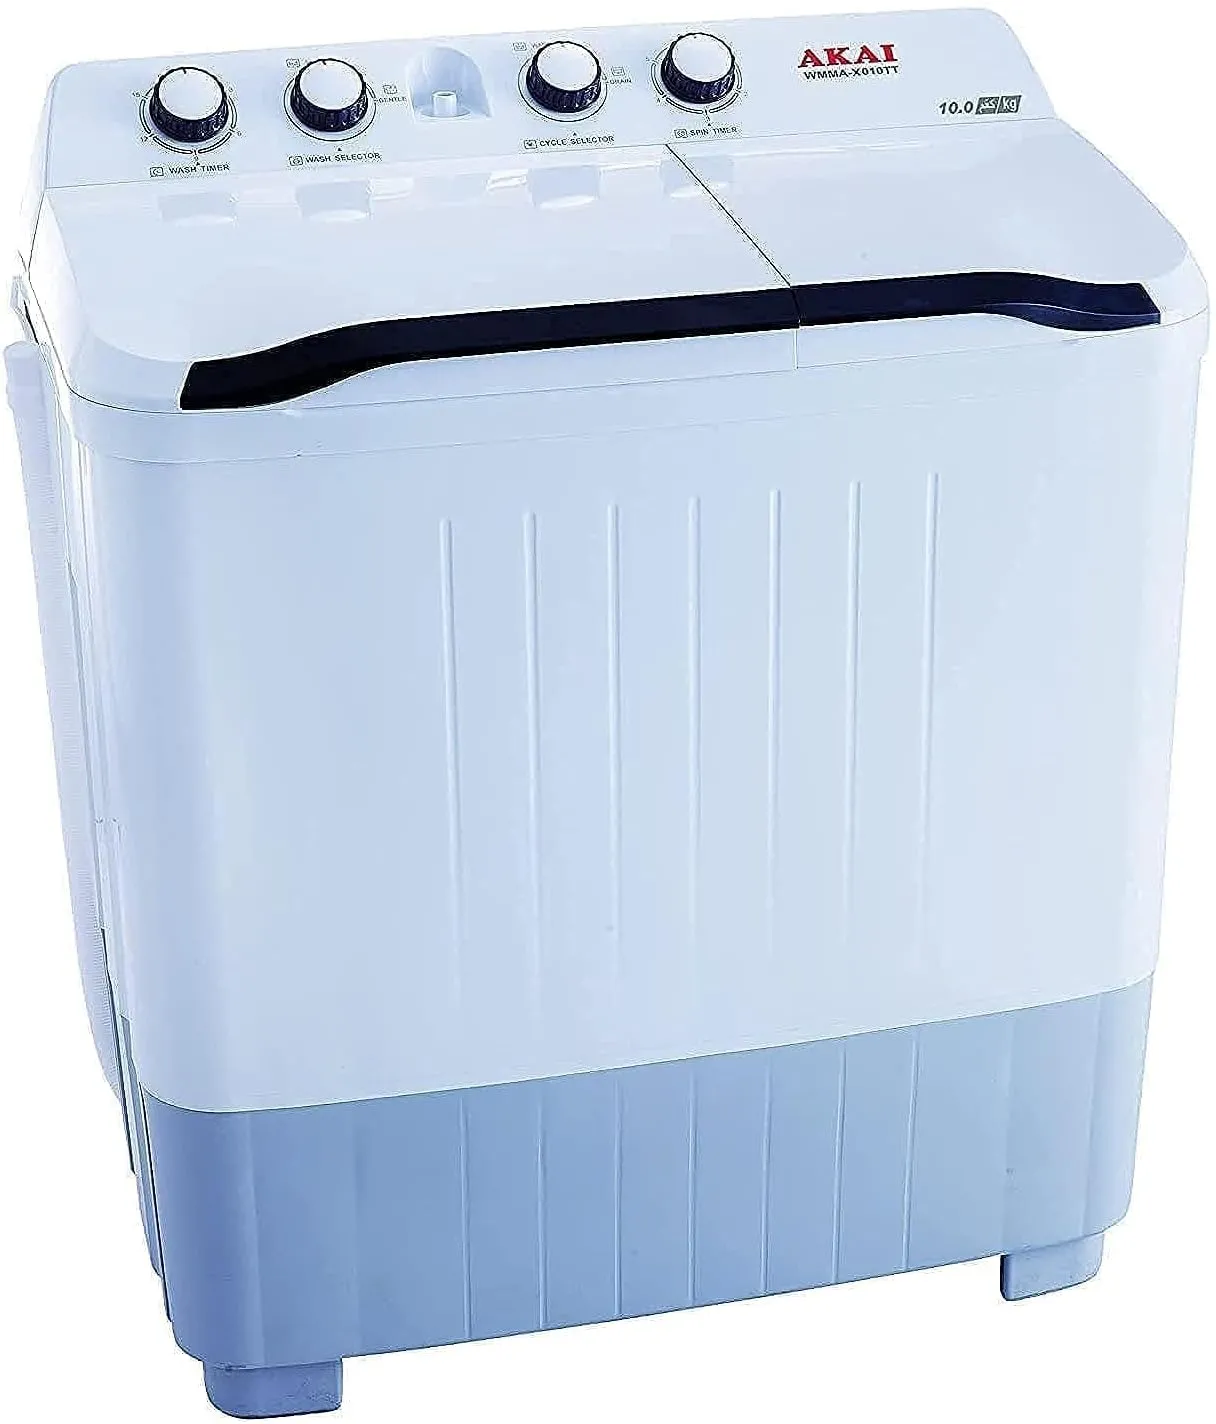 Akai 10 Kg Twin Tub Washing Machine Semi Automatic White Model WMMA-X010TT | 1 Year Warranty.